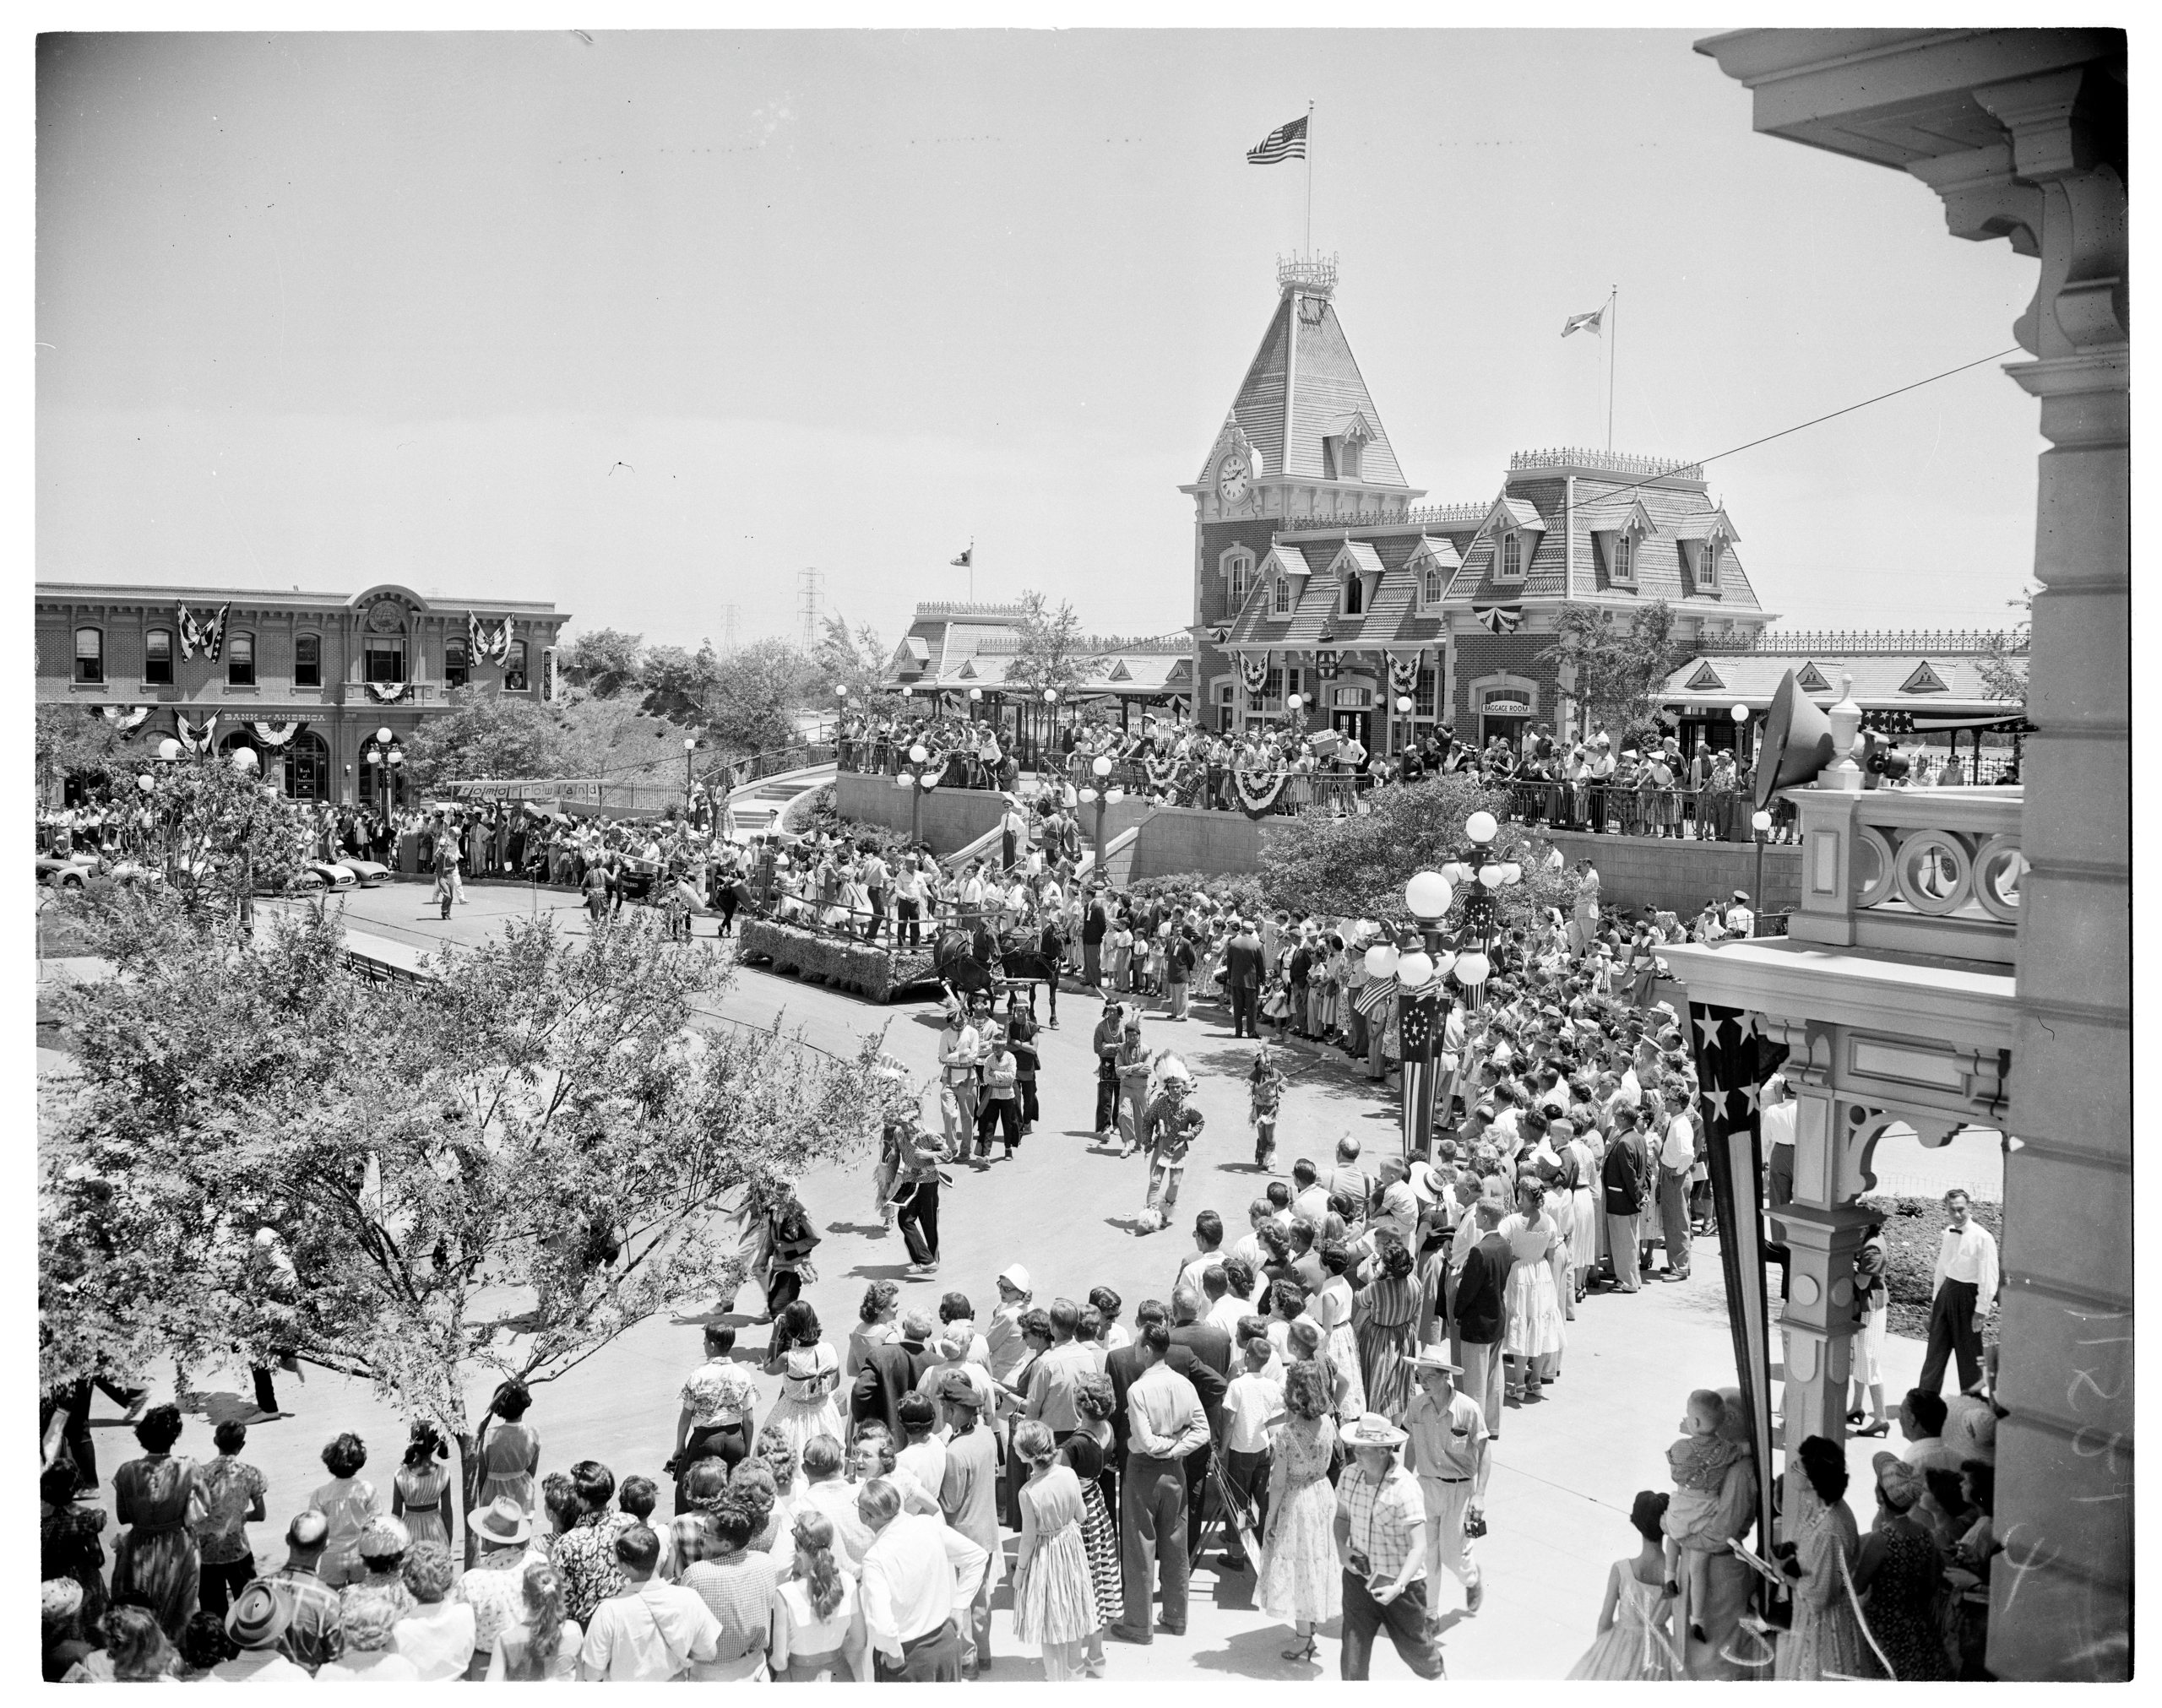 Disneyland opening, 1955